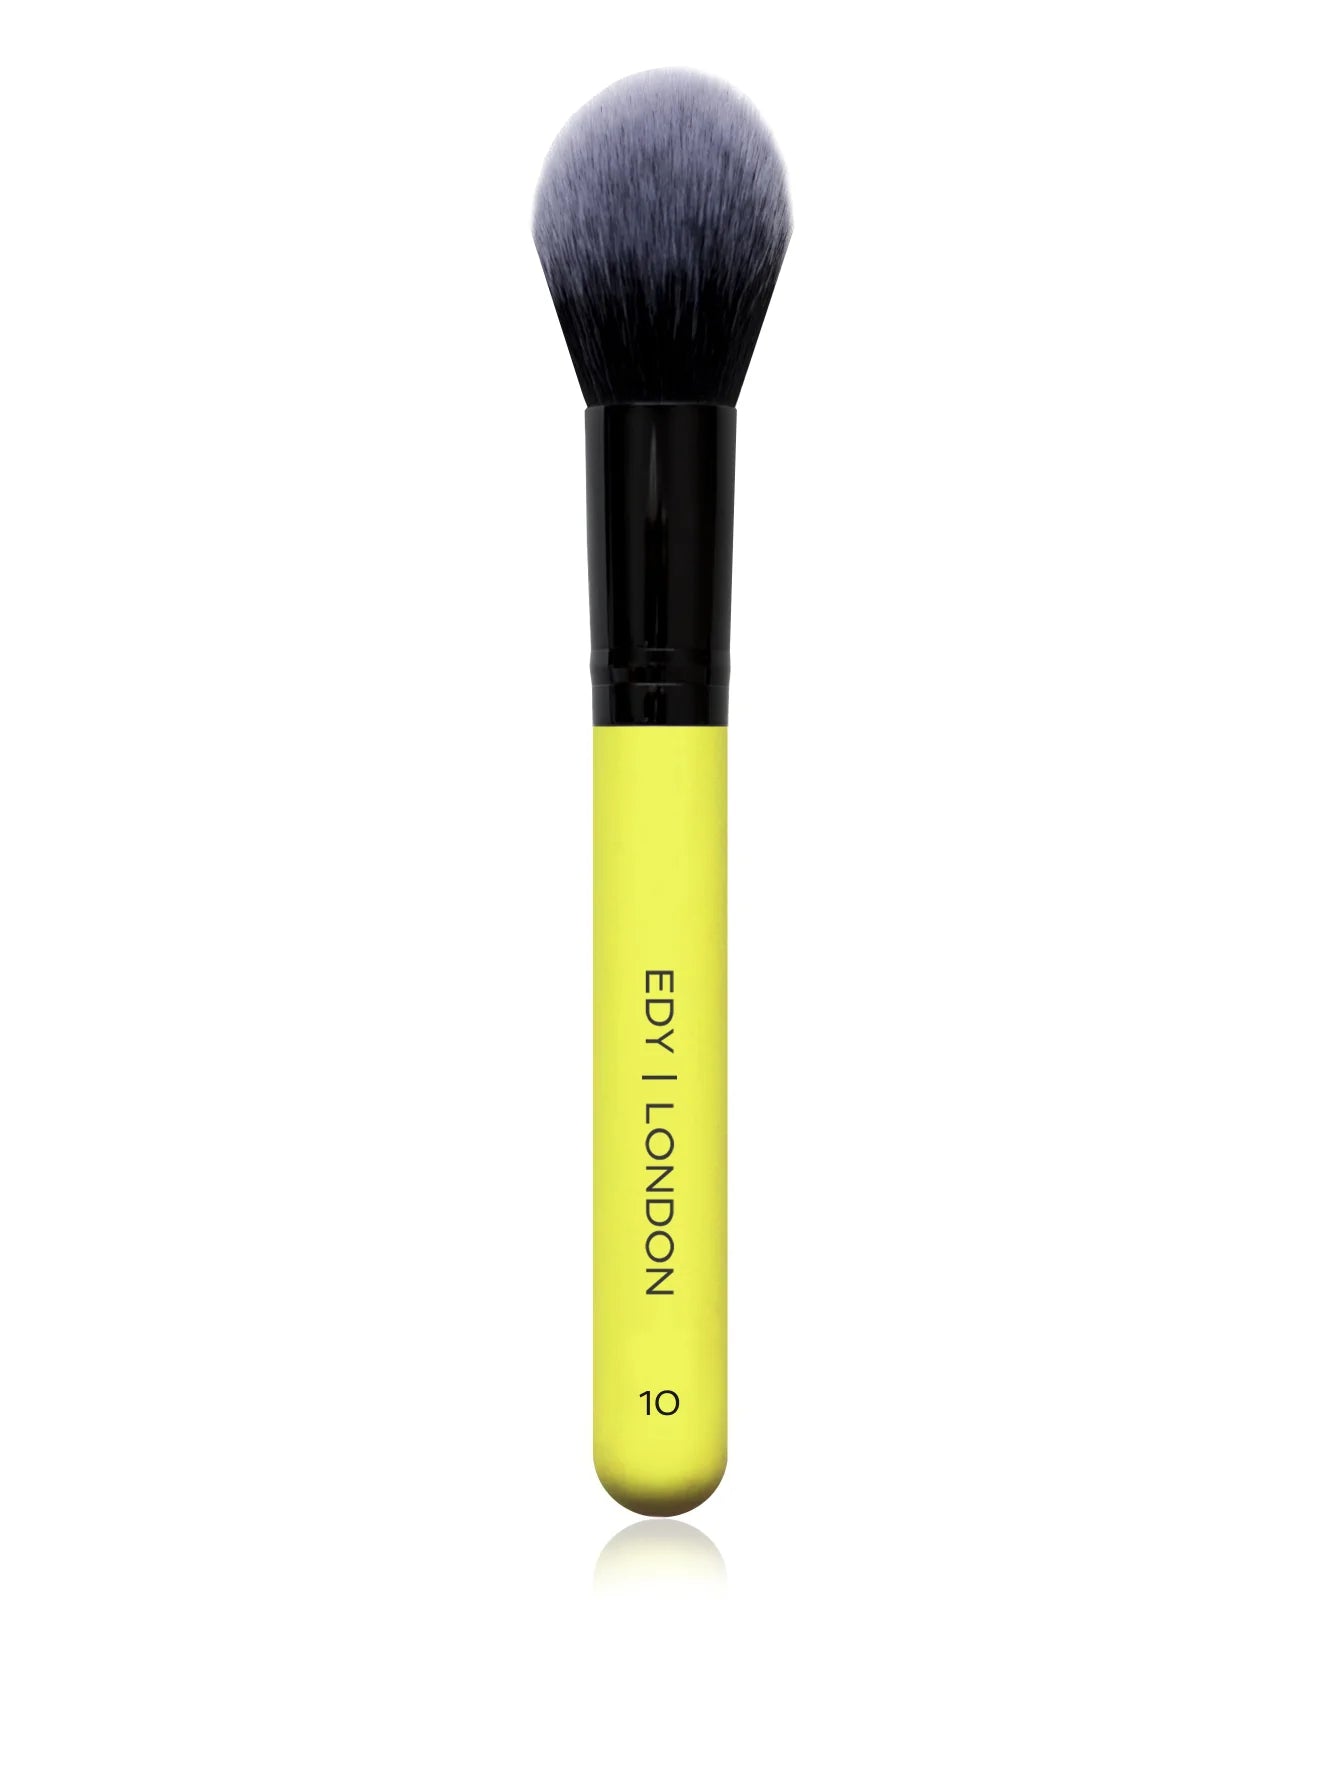 Tapered Face Brush 10 Make-up Brush EDY LONDON Lemon   - EDY LONDON PRODUCTS UK - The Best Makeup Brushes - shop.edy.london